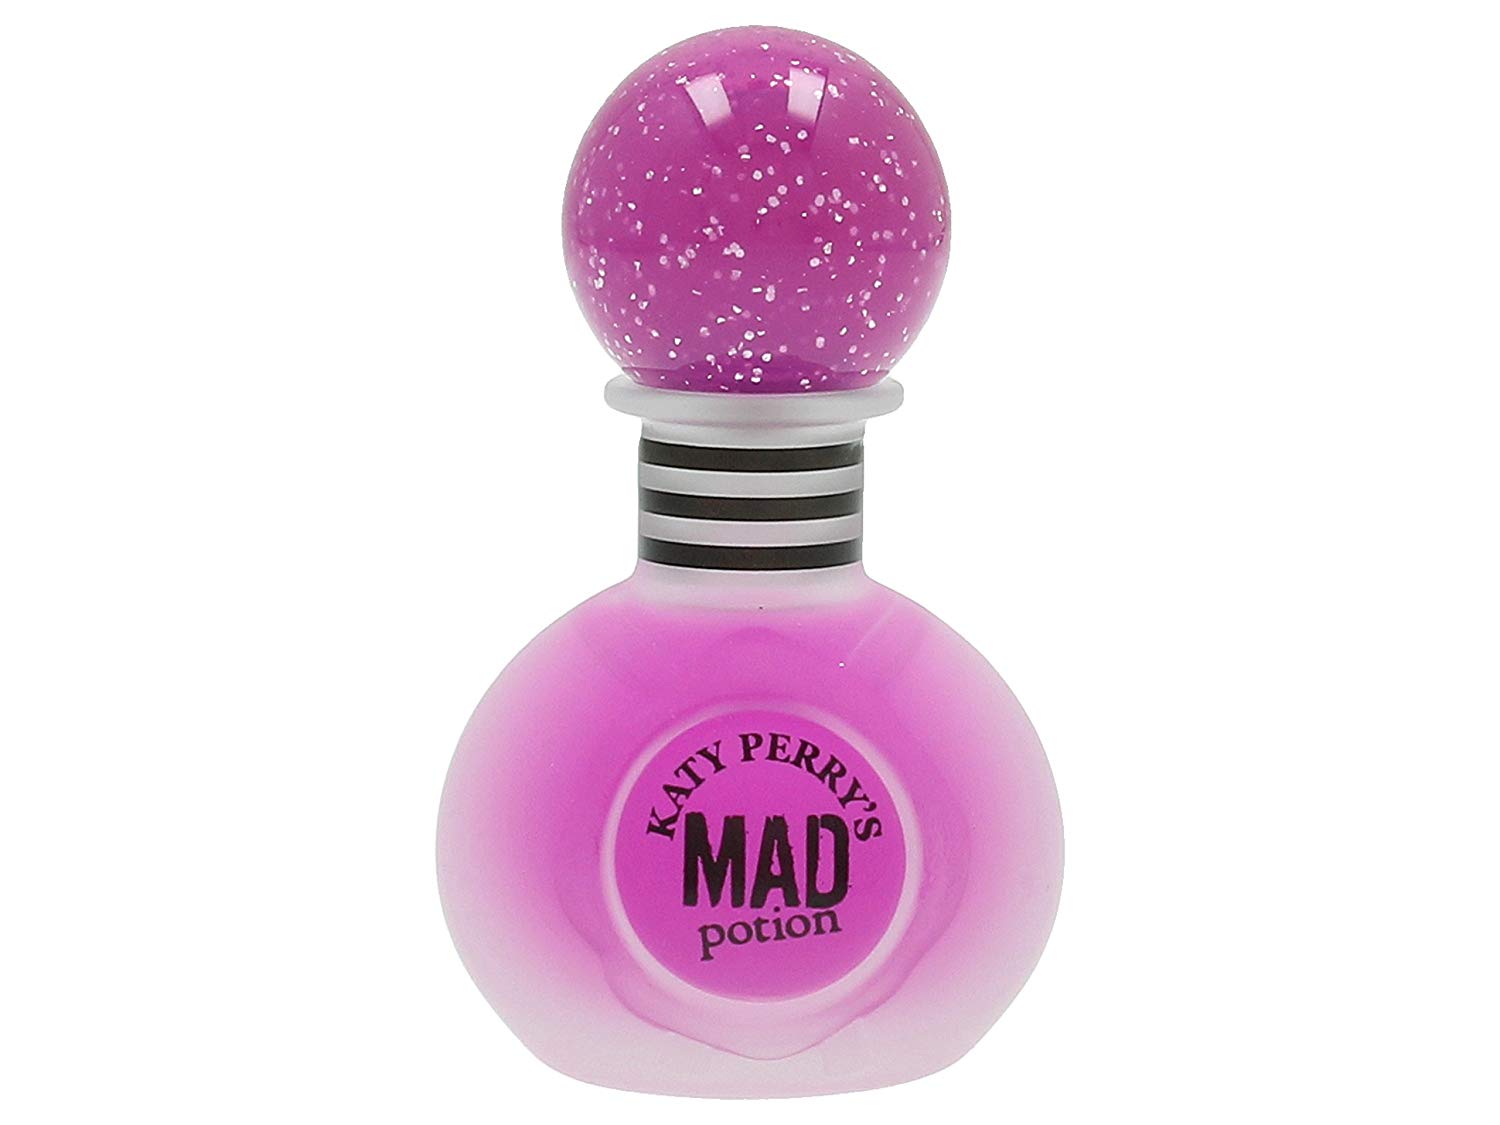 Katy Perrys Mad Potion Eau de Parfum 30ml Spray